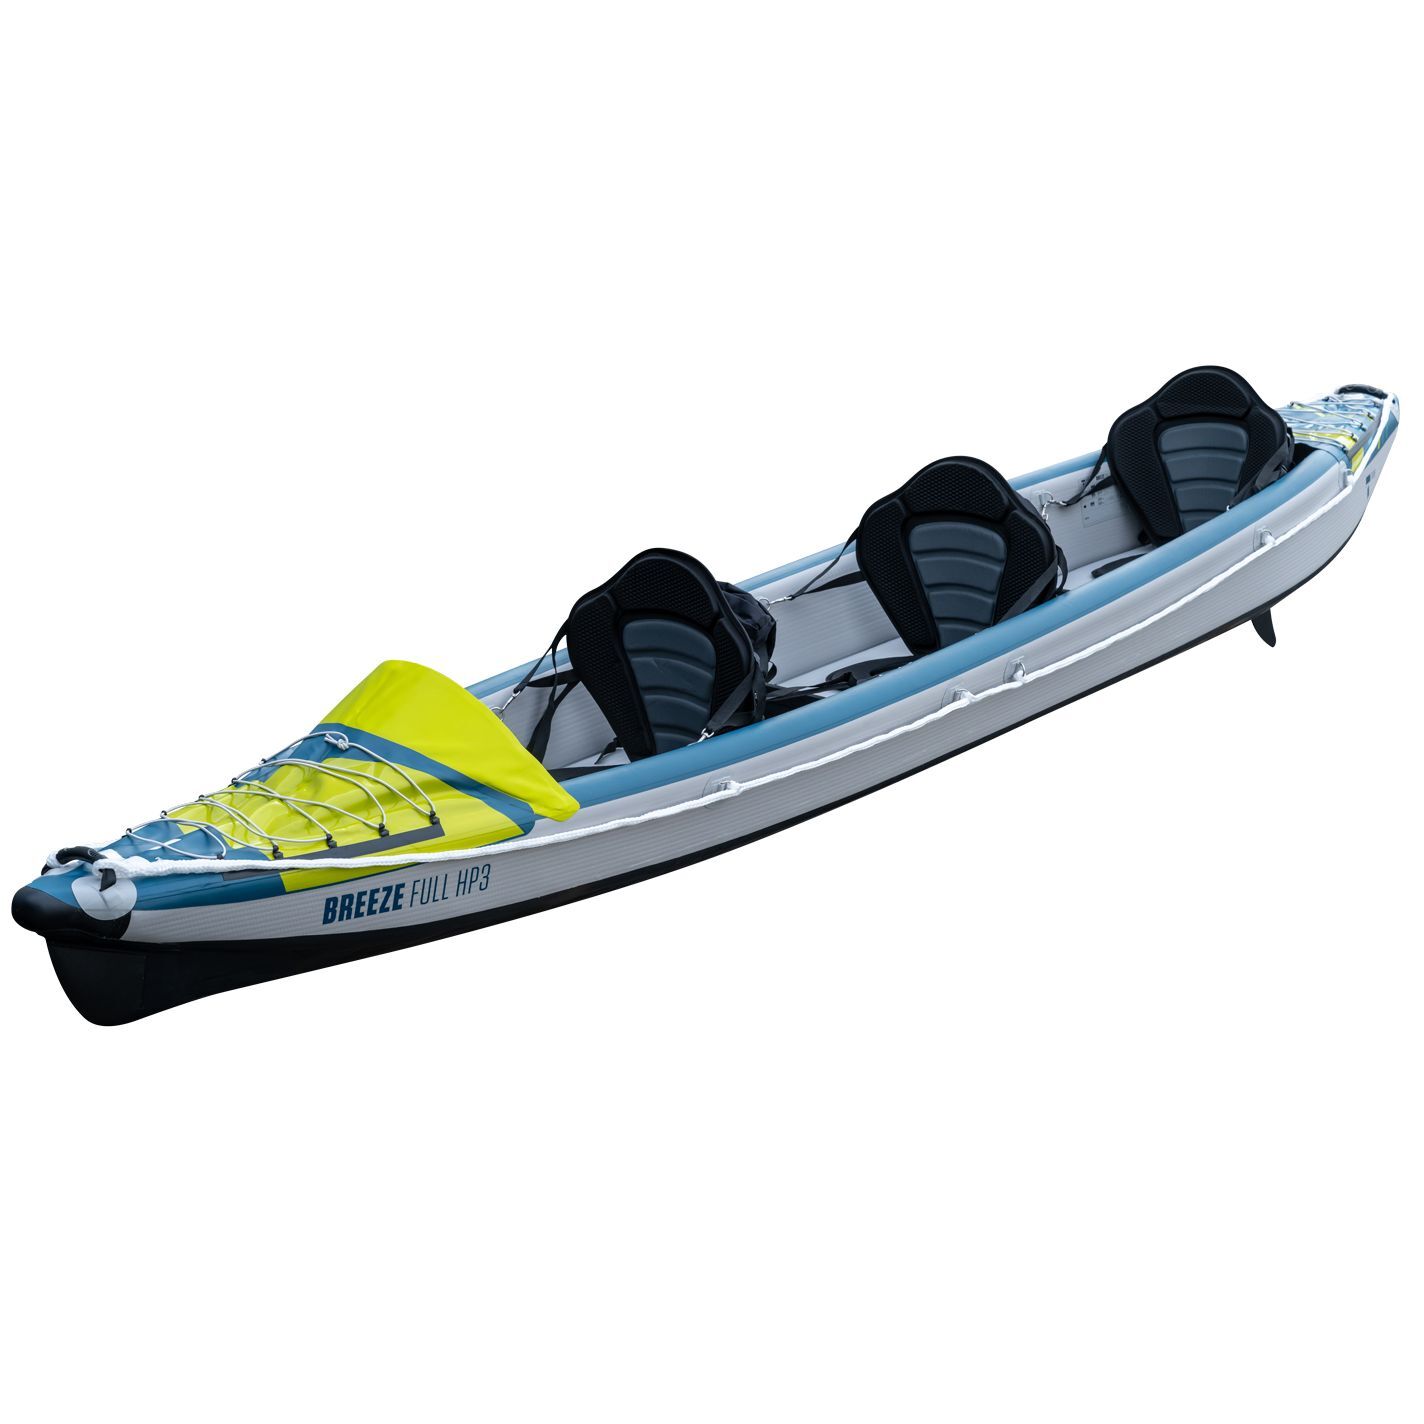 Tahe Outdoor Kayak Air Breeze Full Hp3 - Uppblåsbar kajak